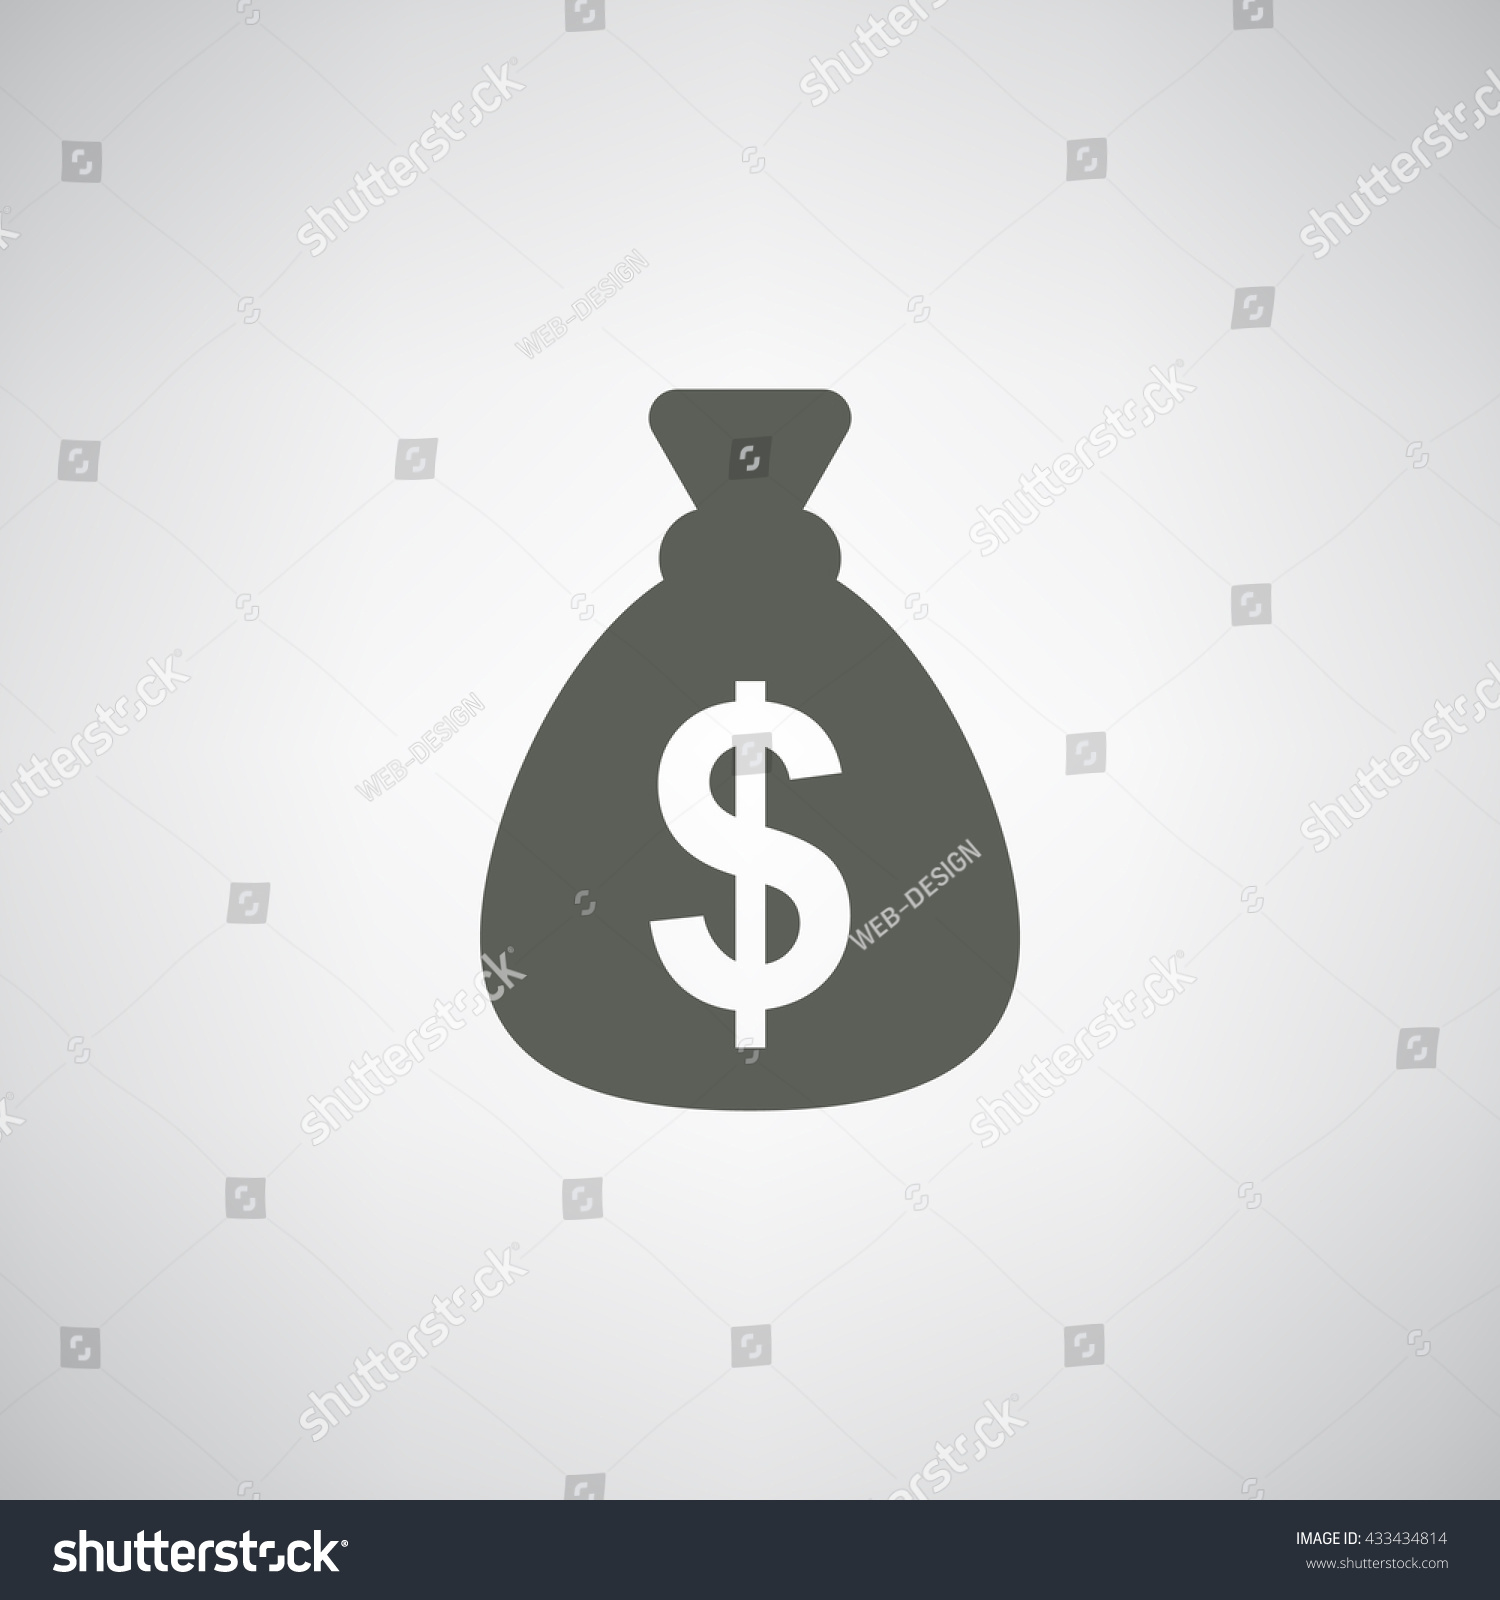 Money Icon Jpg Stock Vector 433434814 : Shutterstock